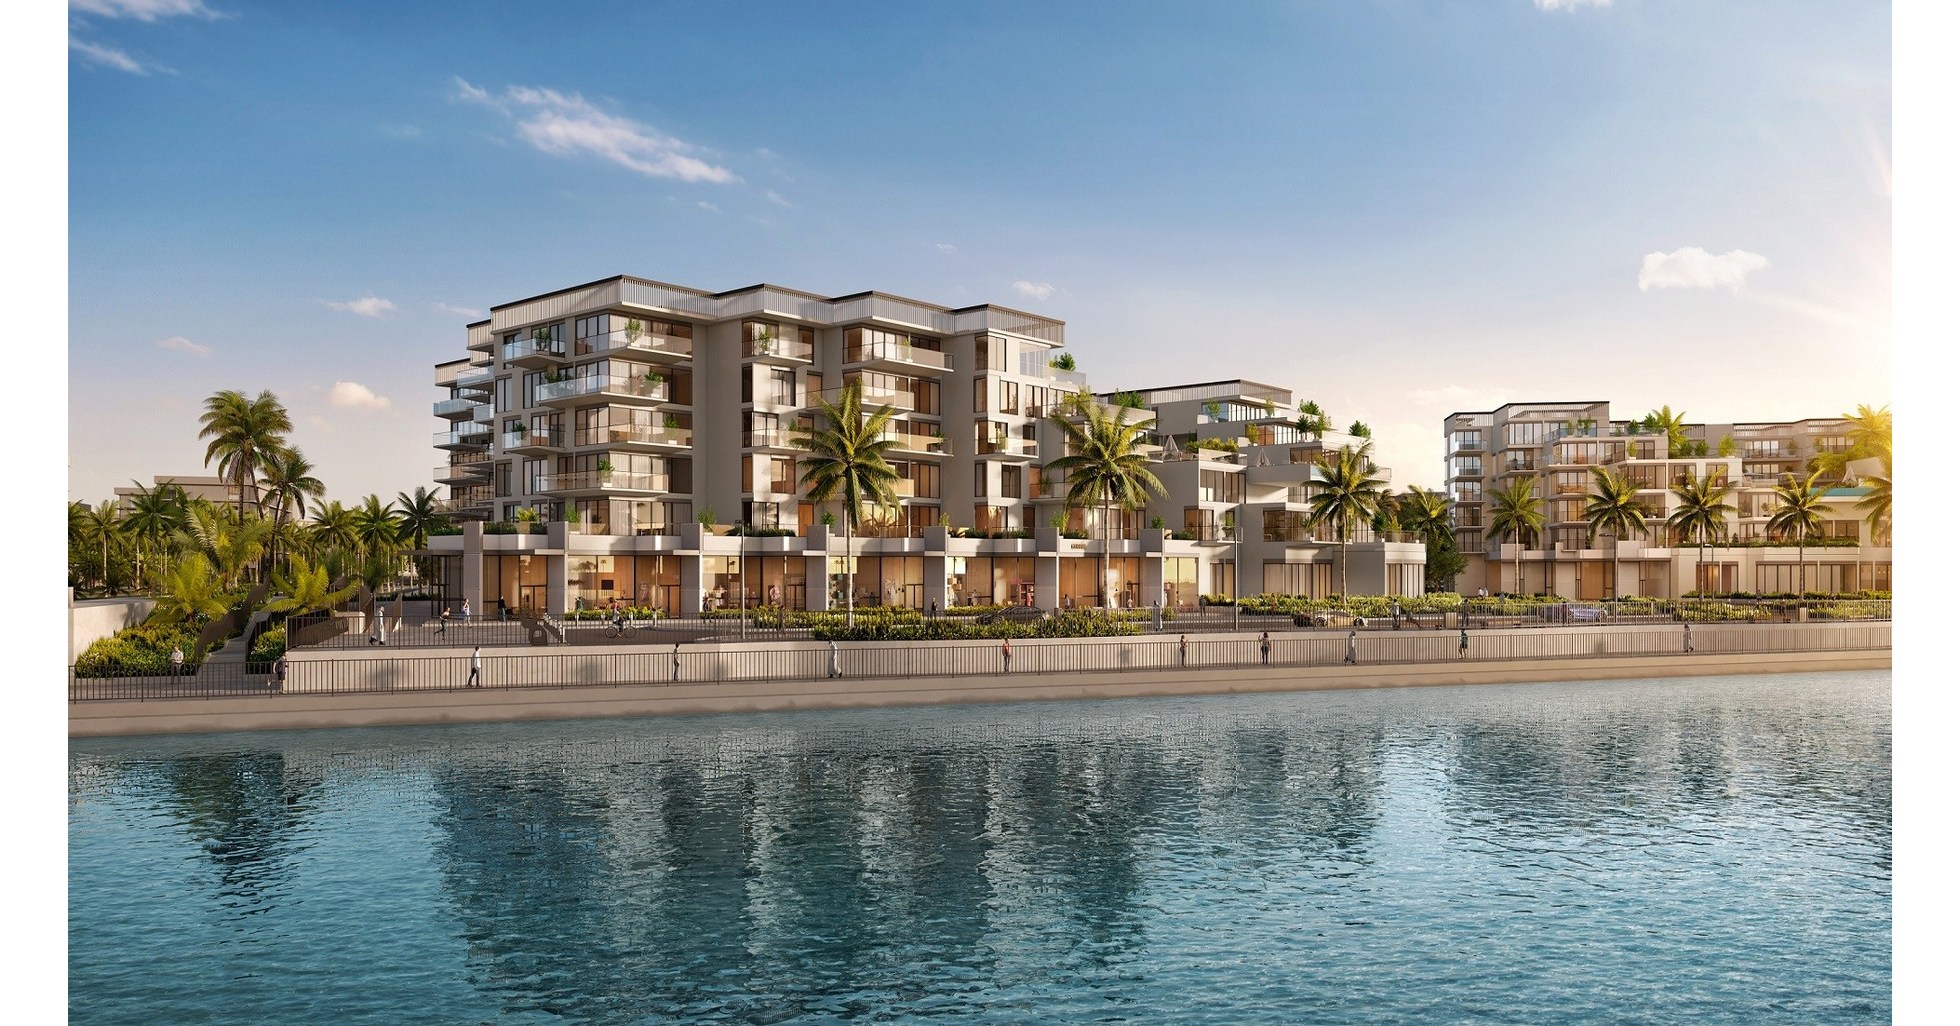 Dar Al Arkan Global launches sales of the most premium residential ...